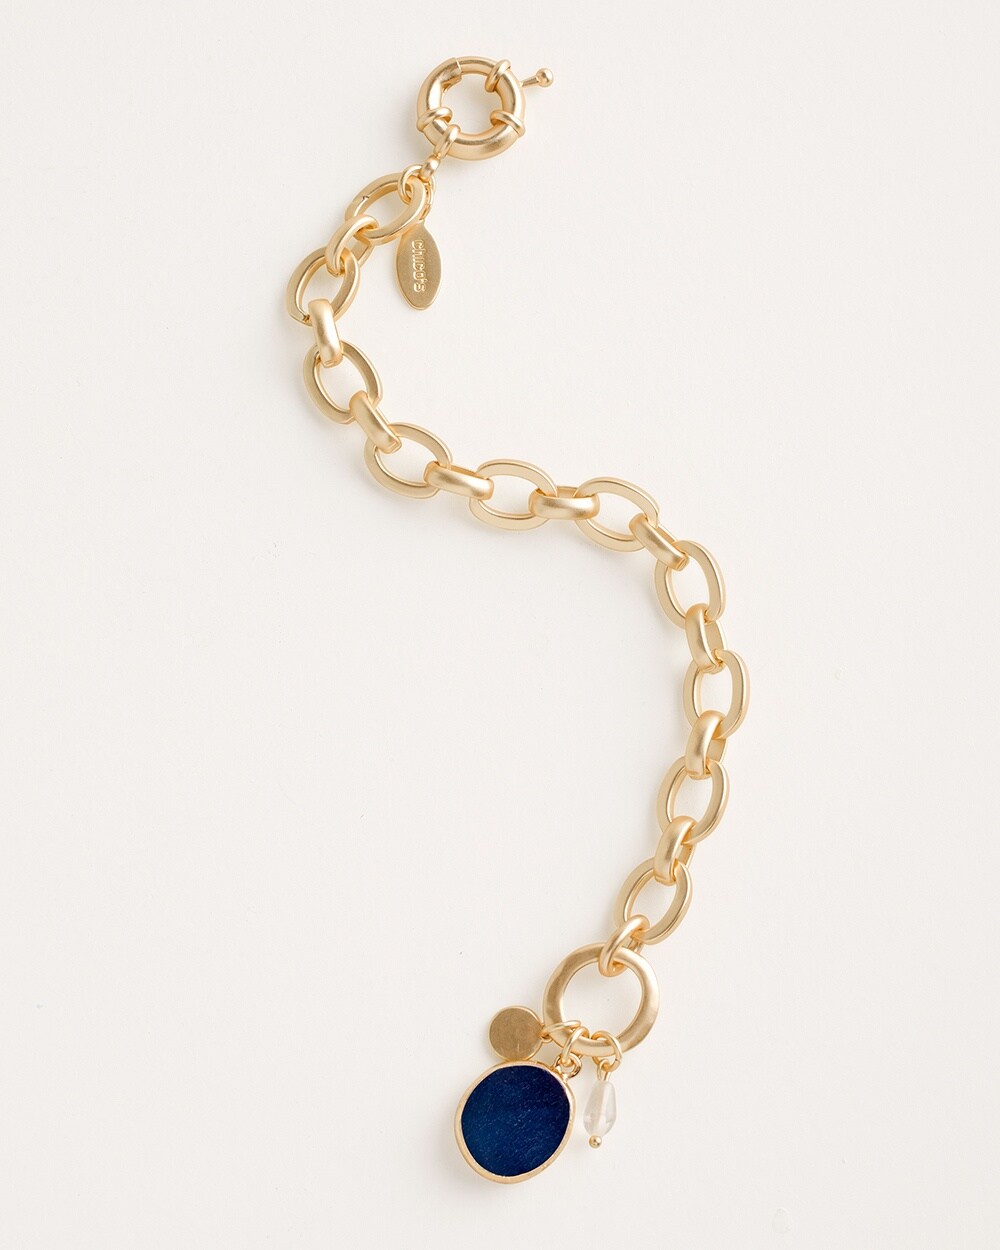 Goldtone Link Bracelet with Indigo Agate Charm